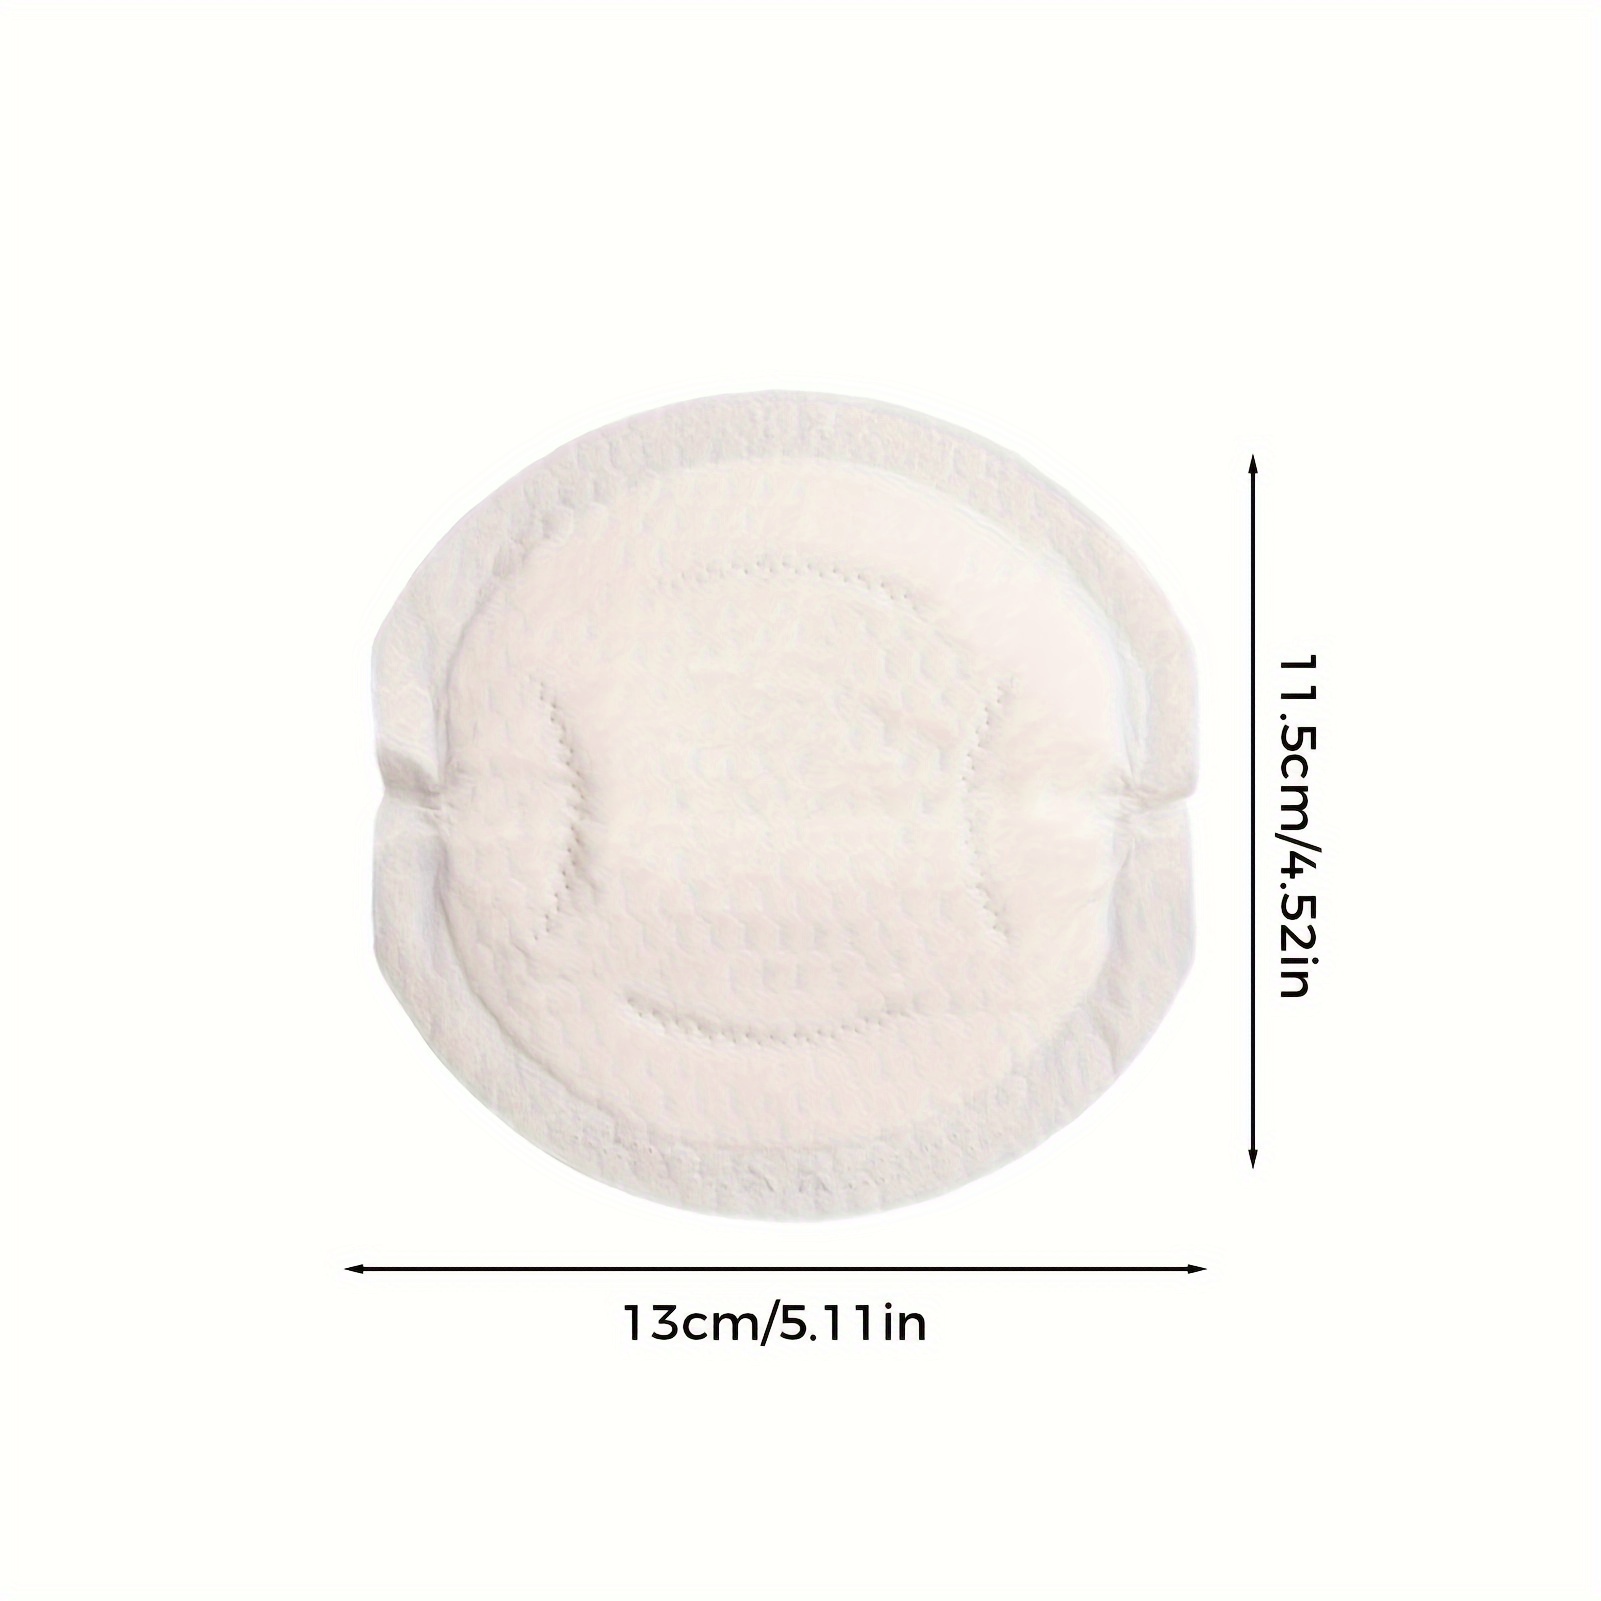 Disposable Breastfeeding Pads, Fabric Maternity Nipplecovers